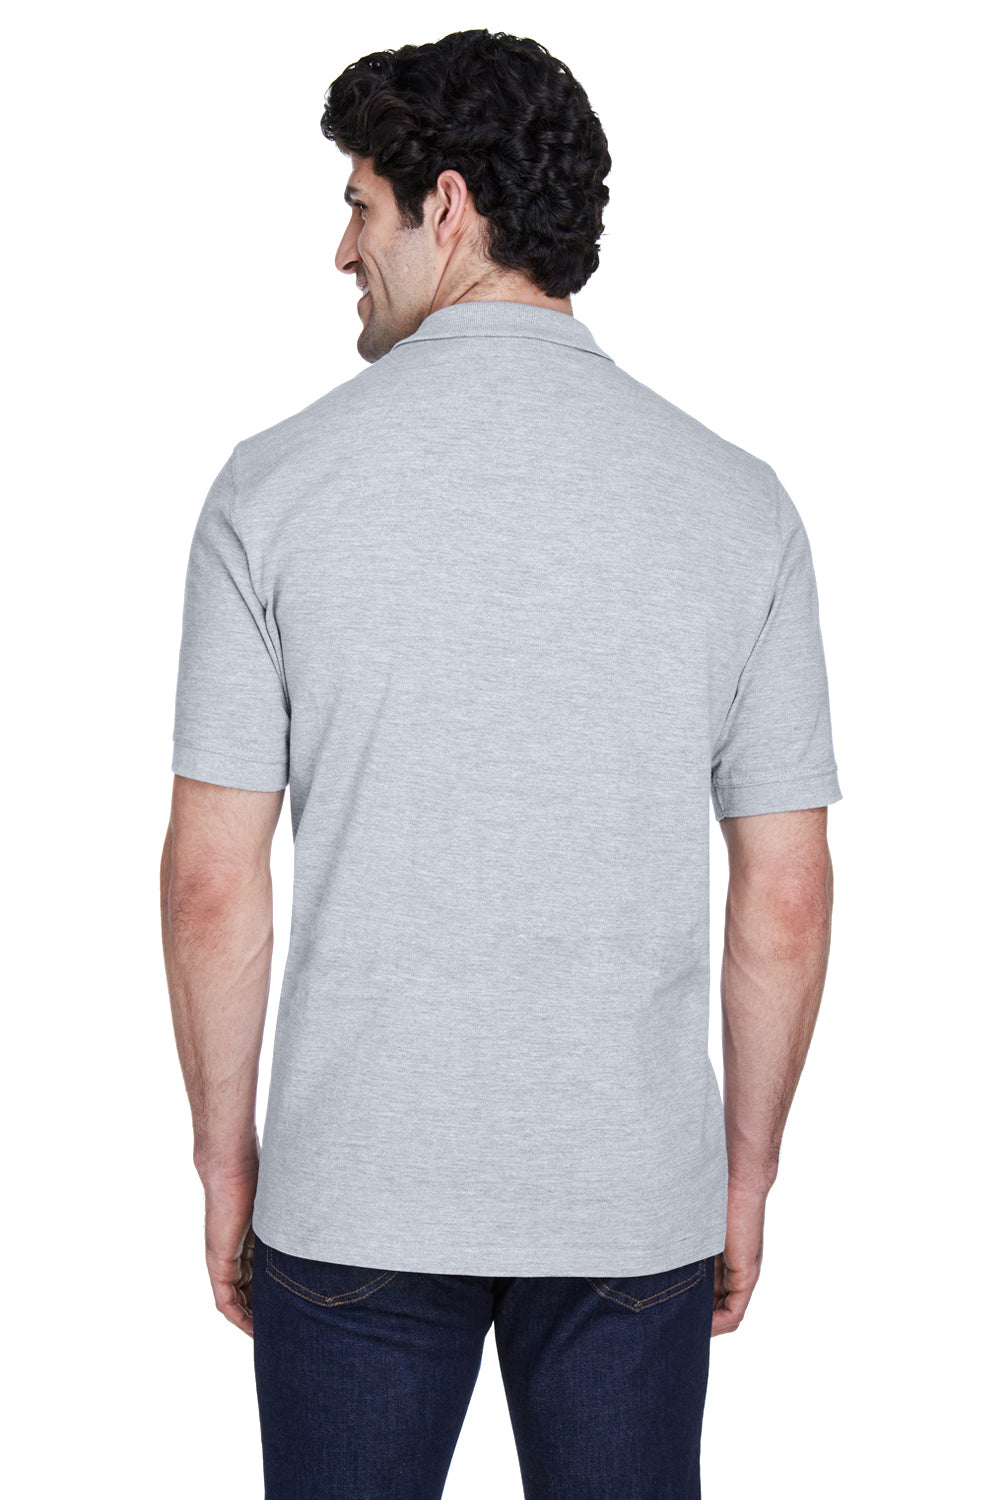 UltraClub 8535 Mens Classic Short Sleeve Polo Shirt Heather Grey Back